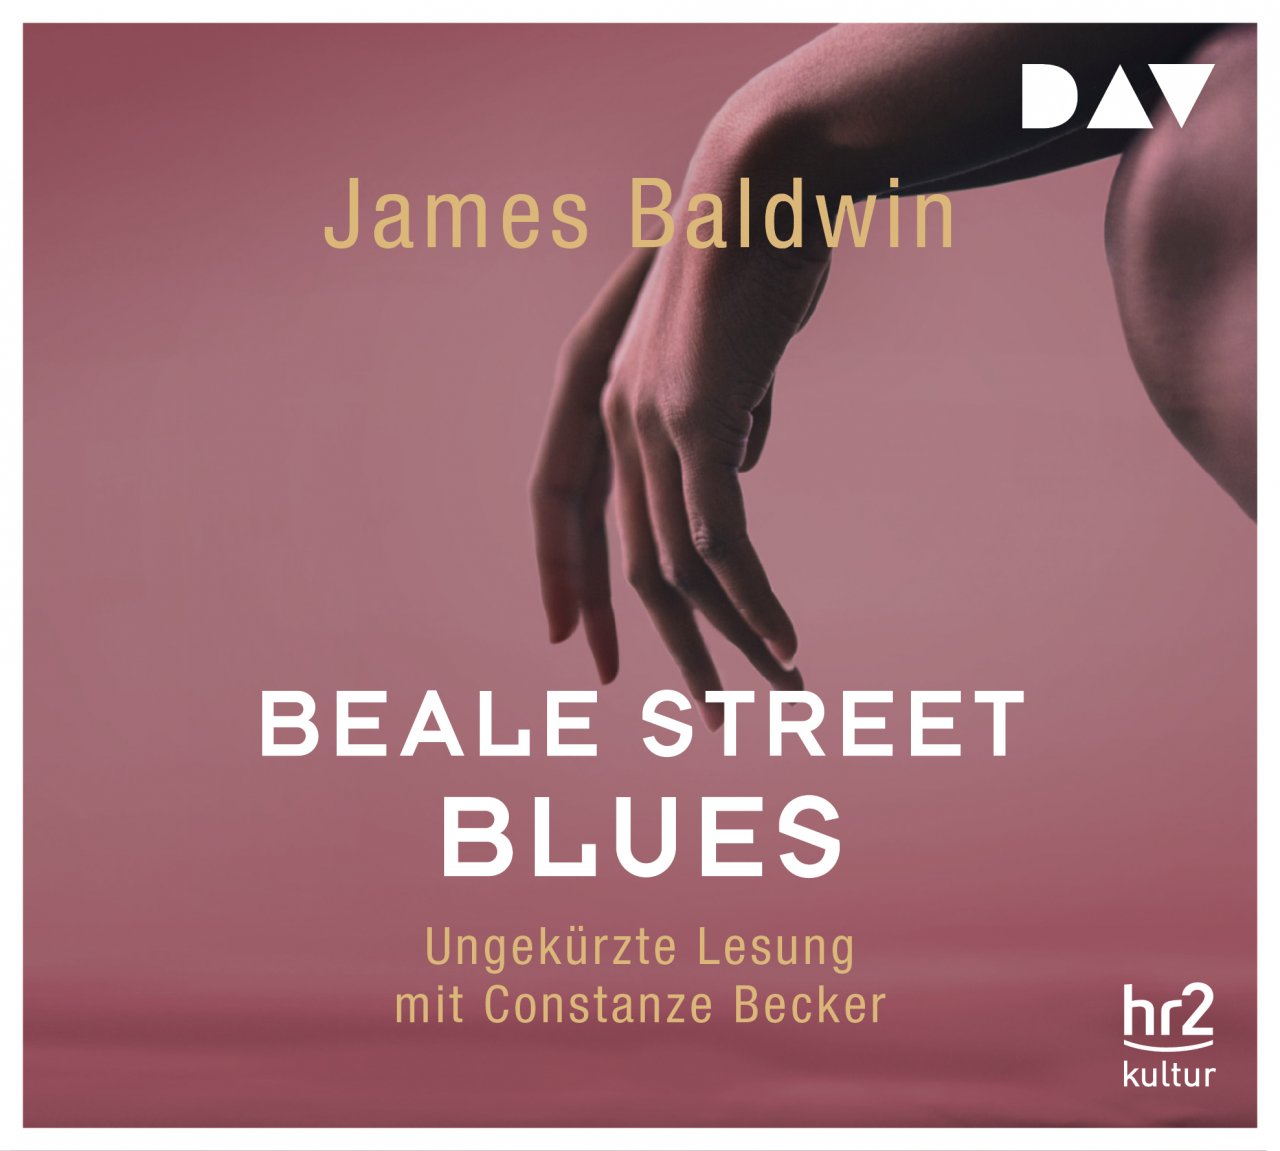 james baldwin beale street blues